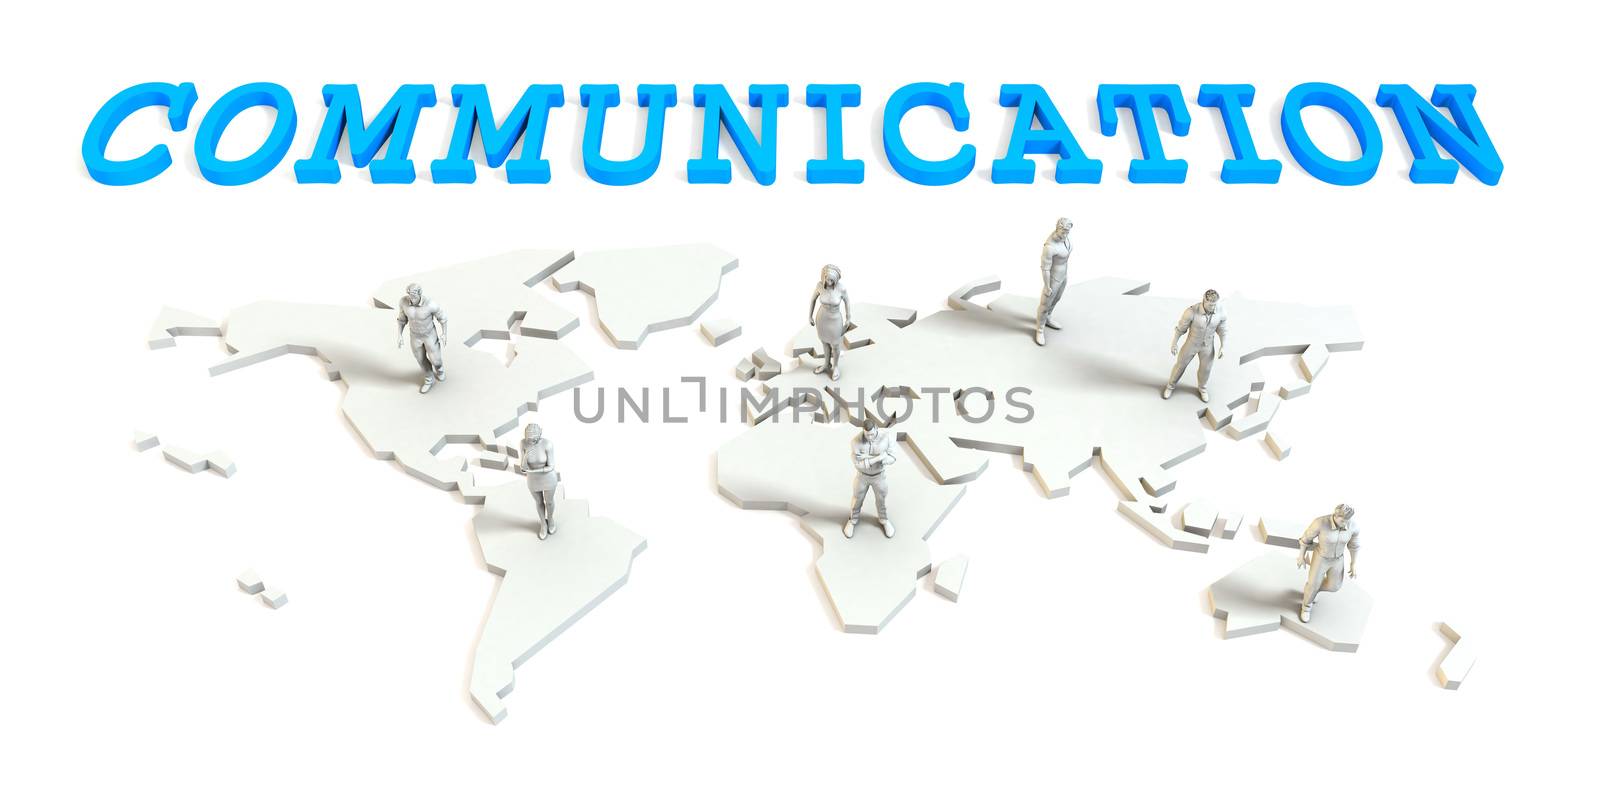 Communication Global Business by kentoh